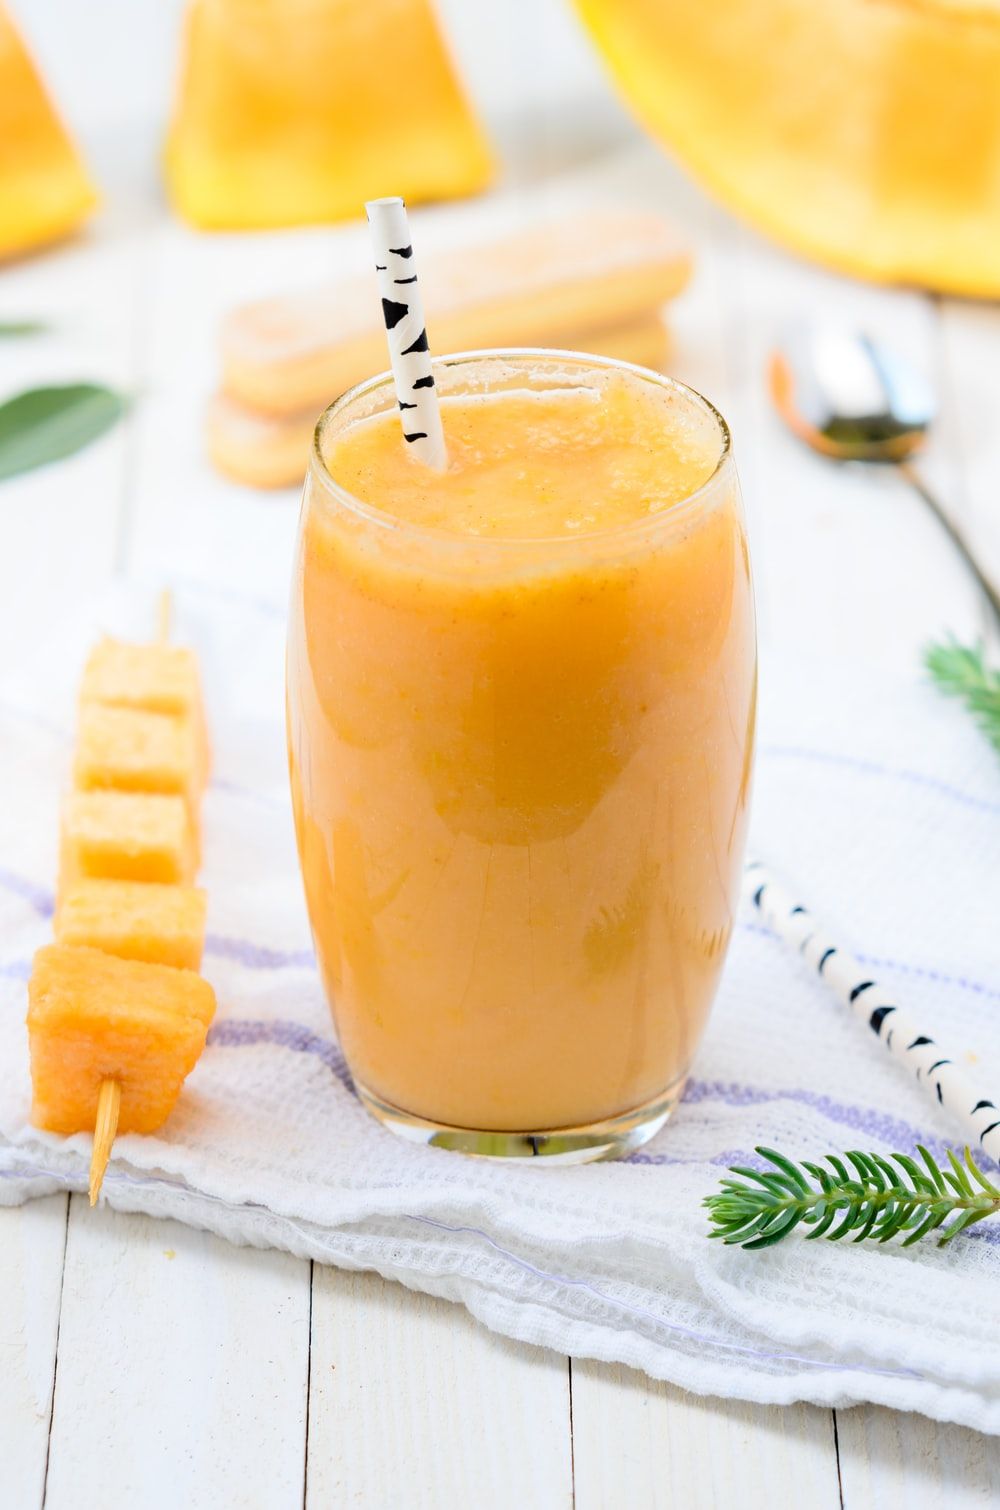 Mango Juice Picture. Download Free Image